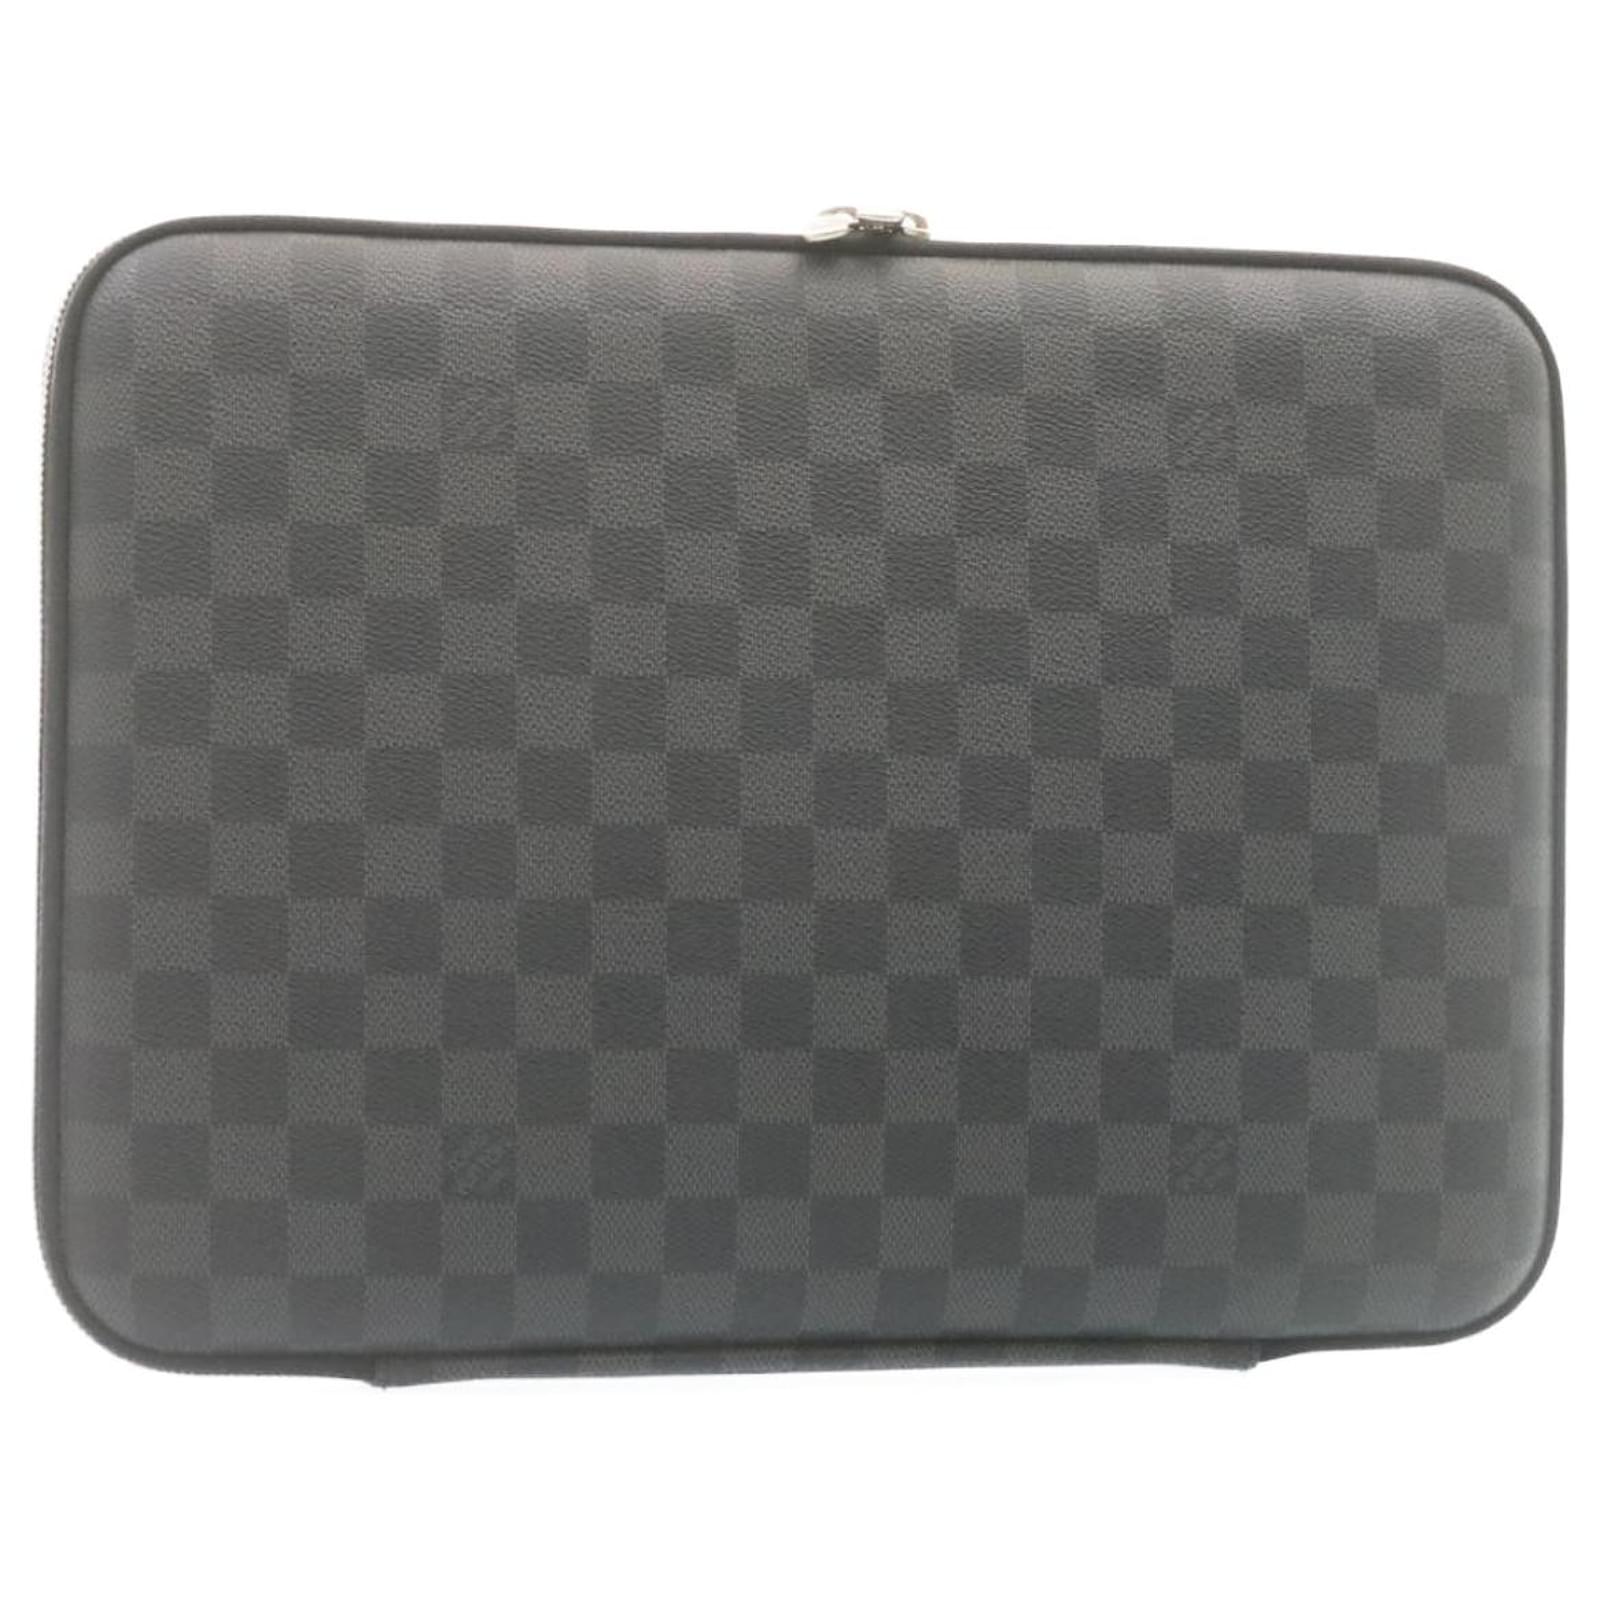 Louis Vuitton Laptop Bag - 'Black